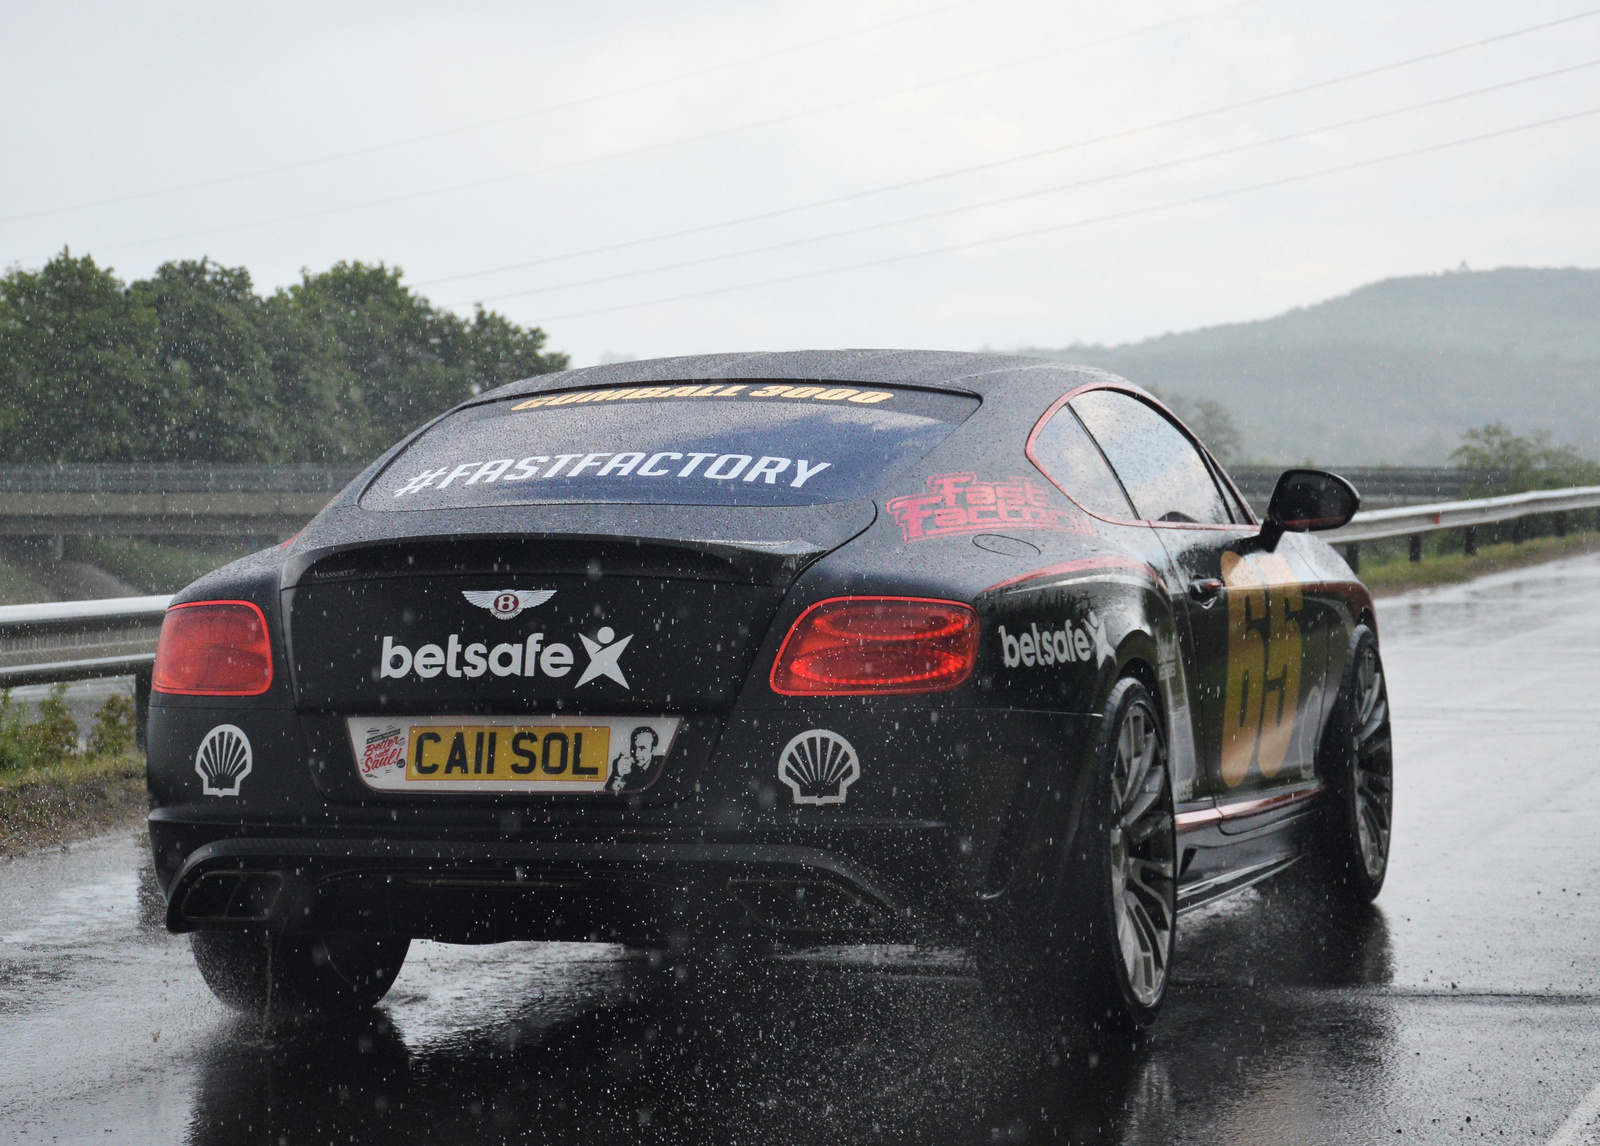 Bentley Mansory Continental GT Speed 2015